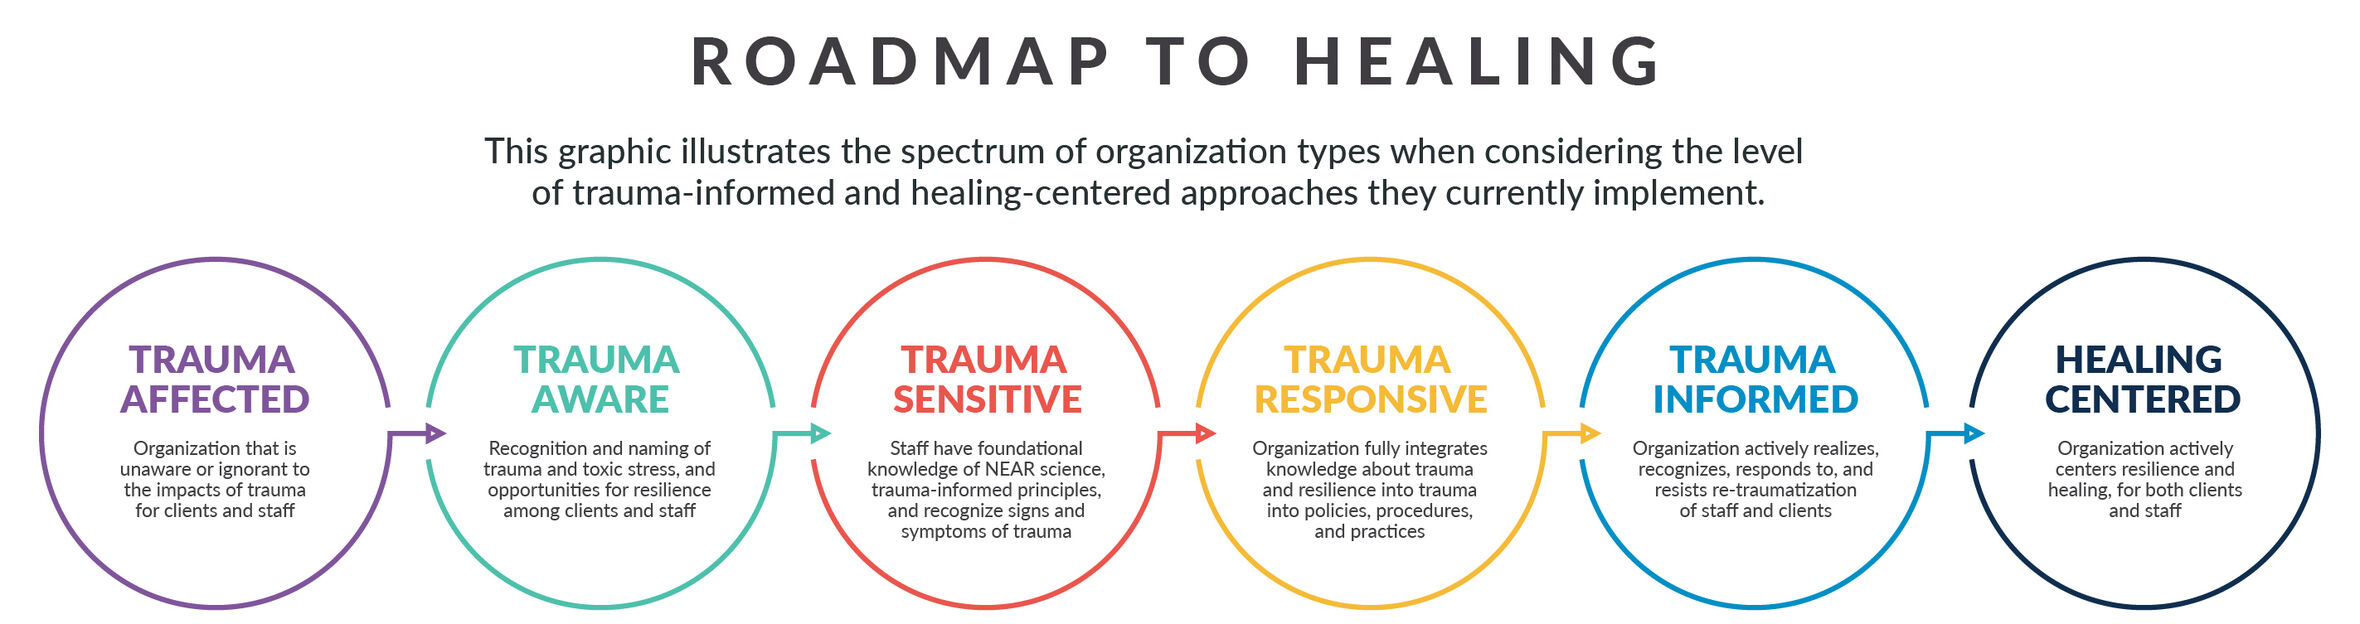 Roadmap to Healing Graphic